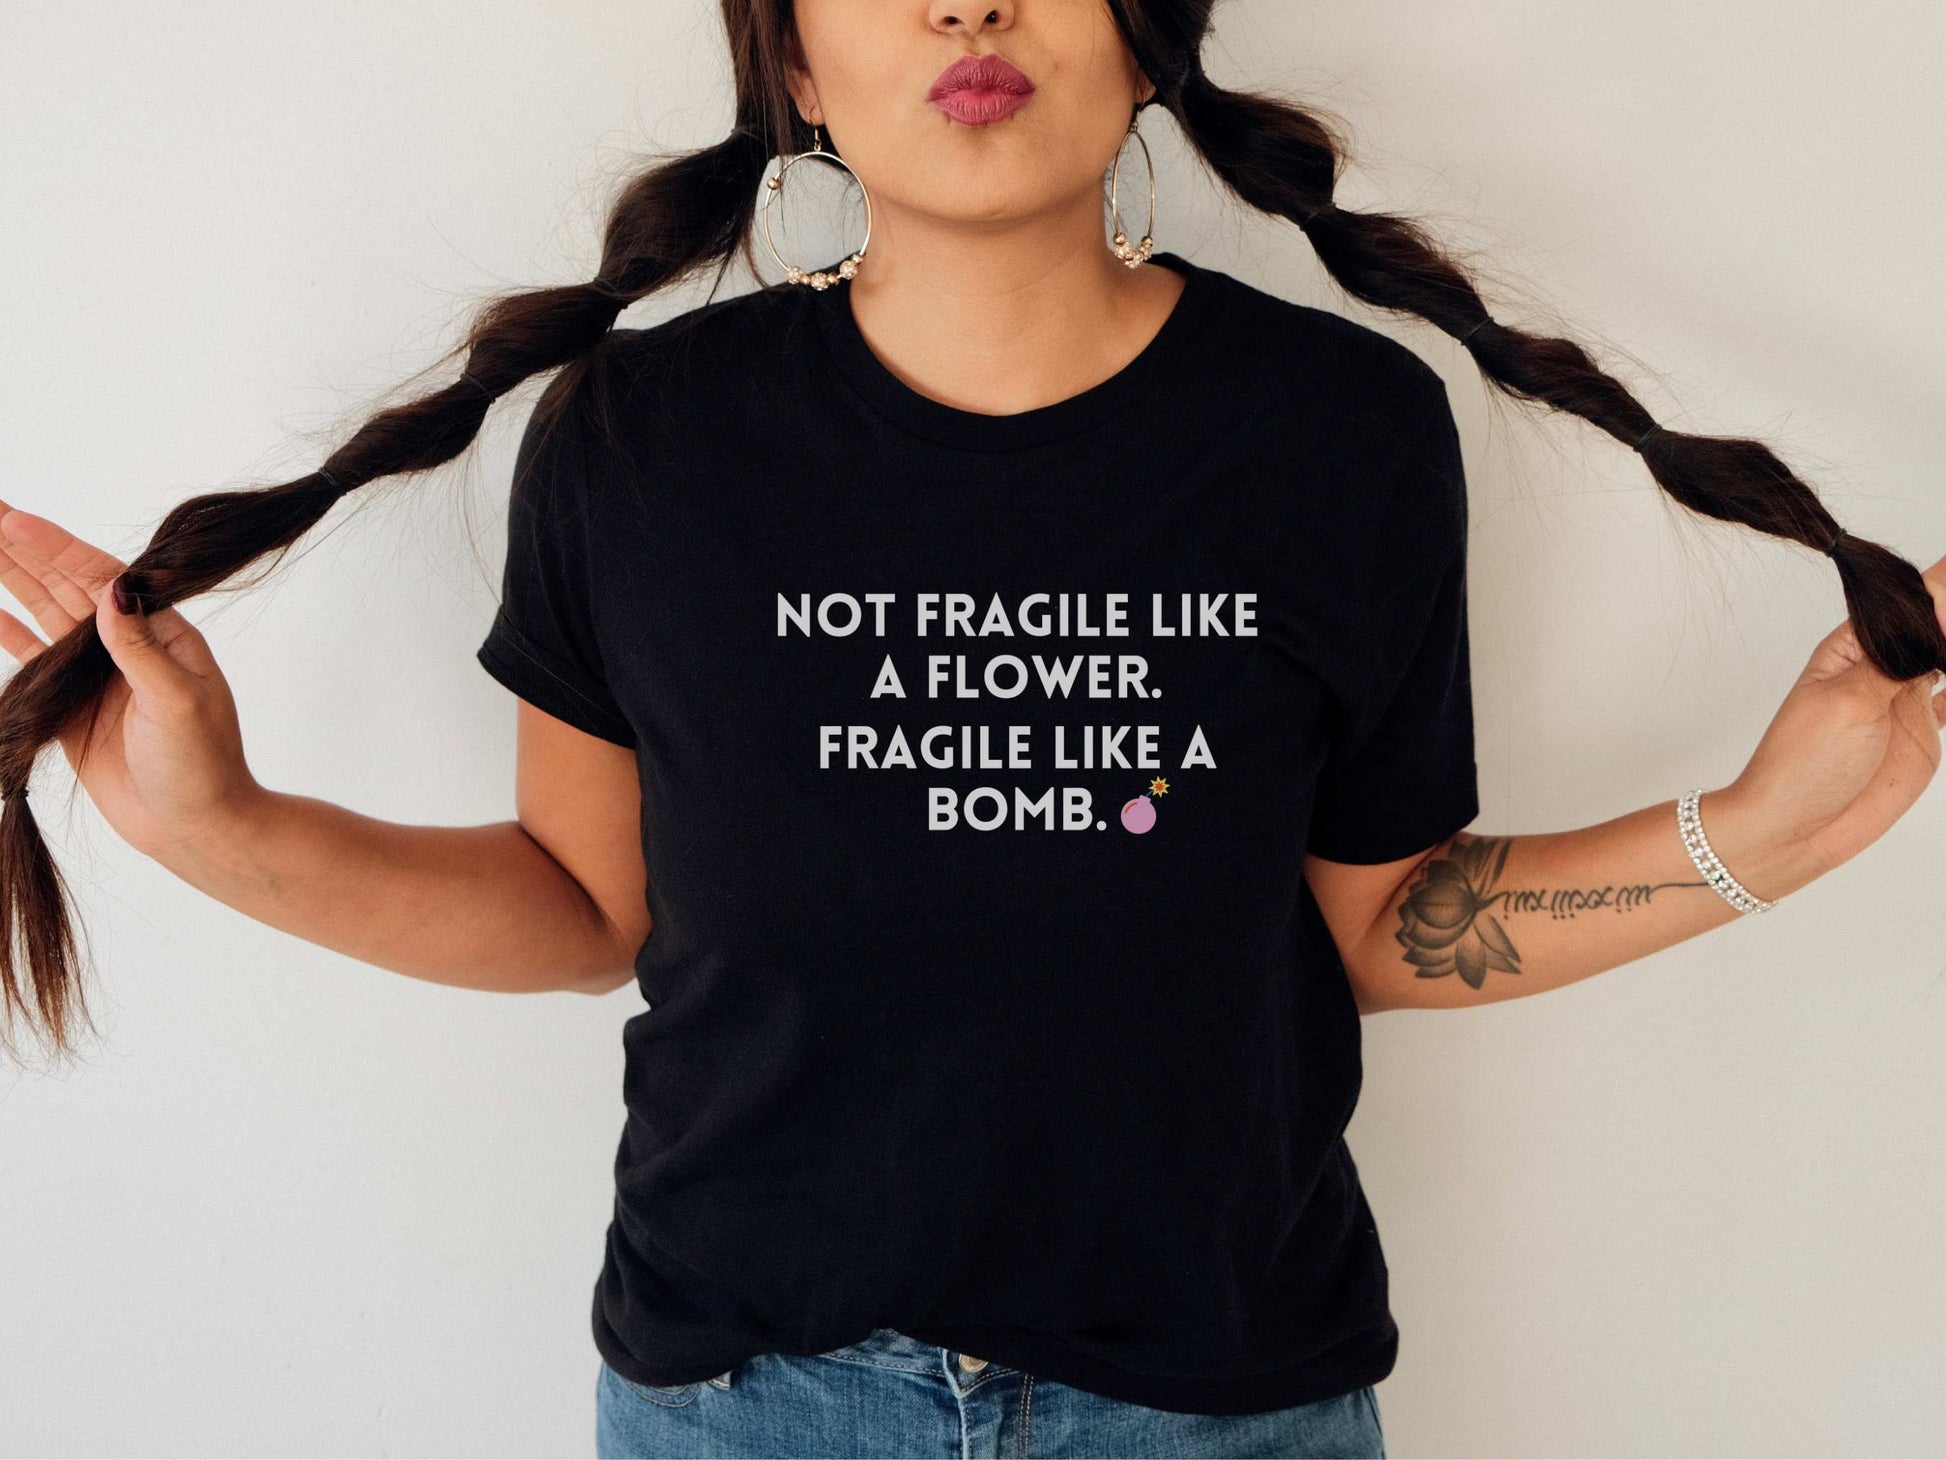 Fragile Like a Bomb Frida Kahlo T-Shirt in Black